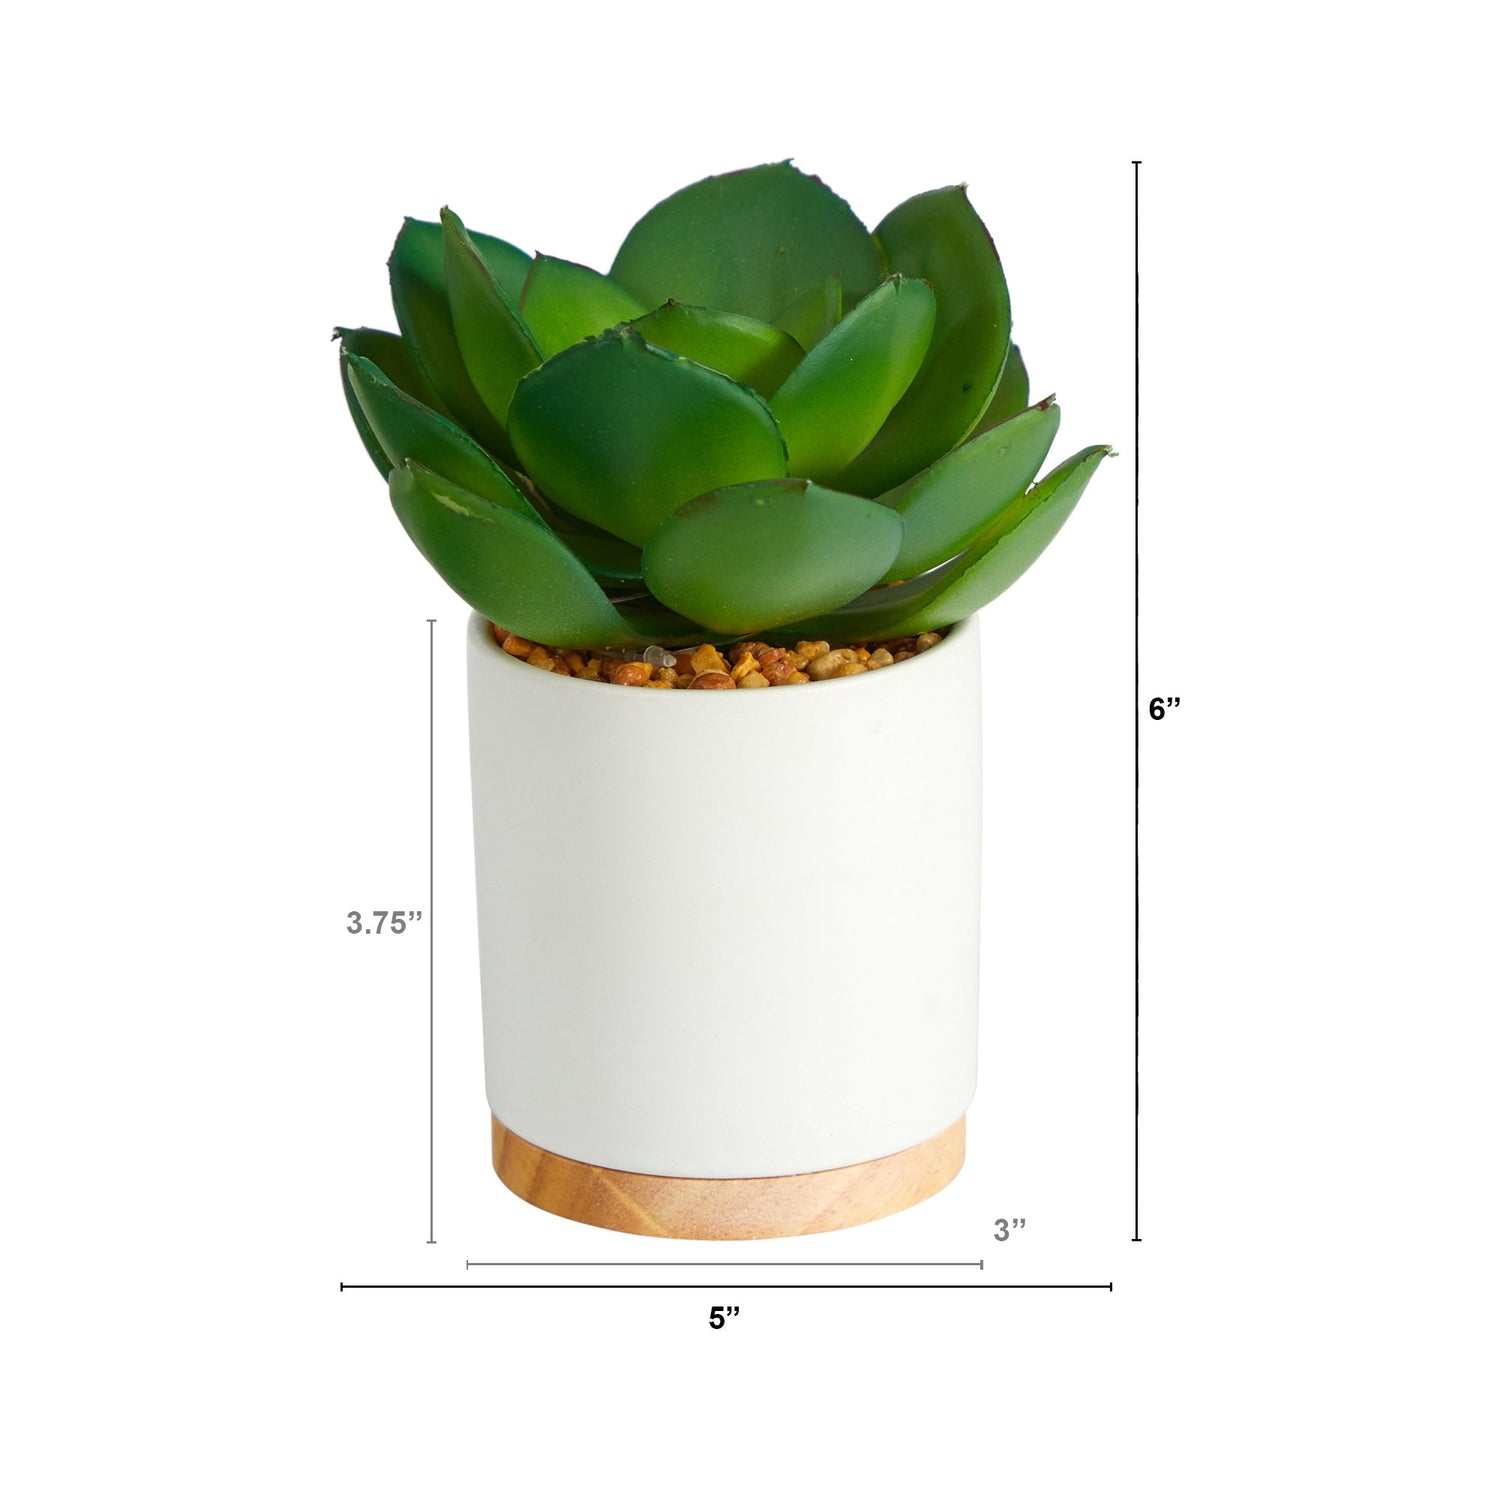 6” Succulent Artificial Plant in White Ceramic Planter